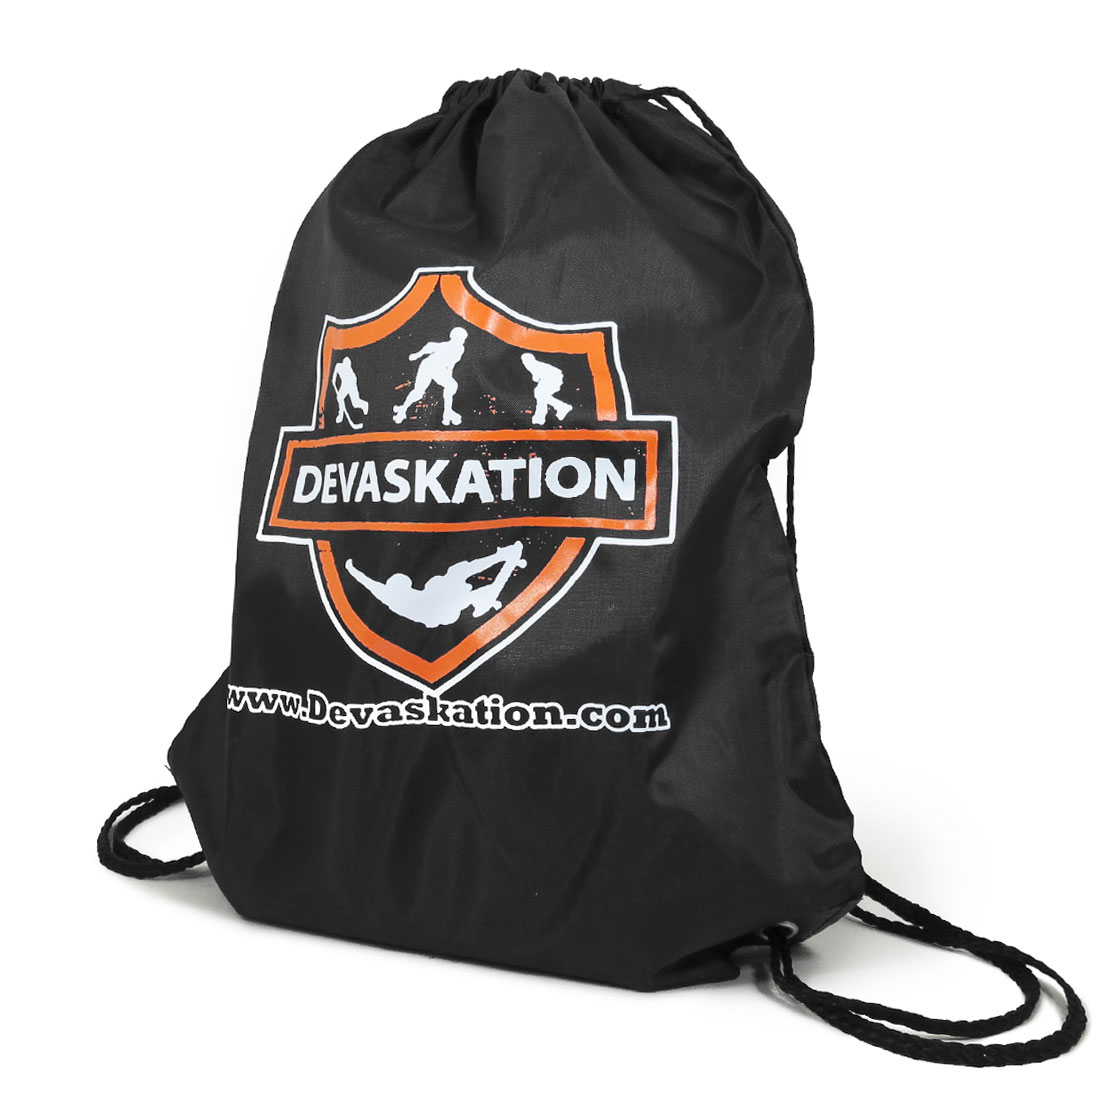 Skate Bags - Devaskation.com